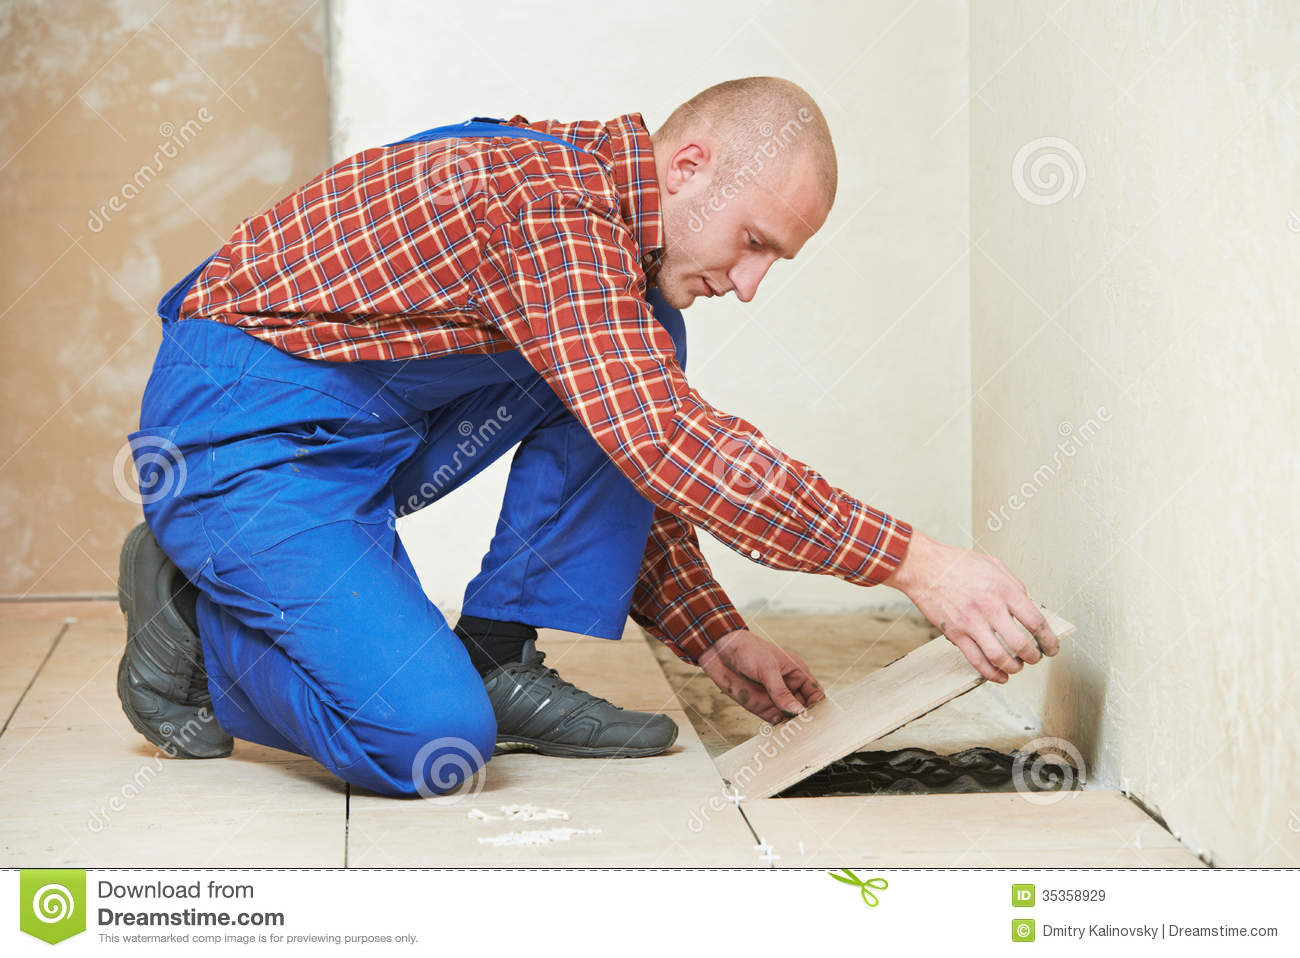 Professional Tiler Builder Worker Installing Home Floor Tile At Repair